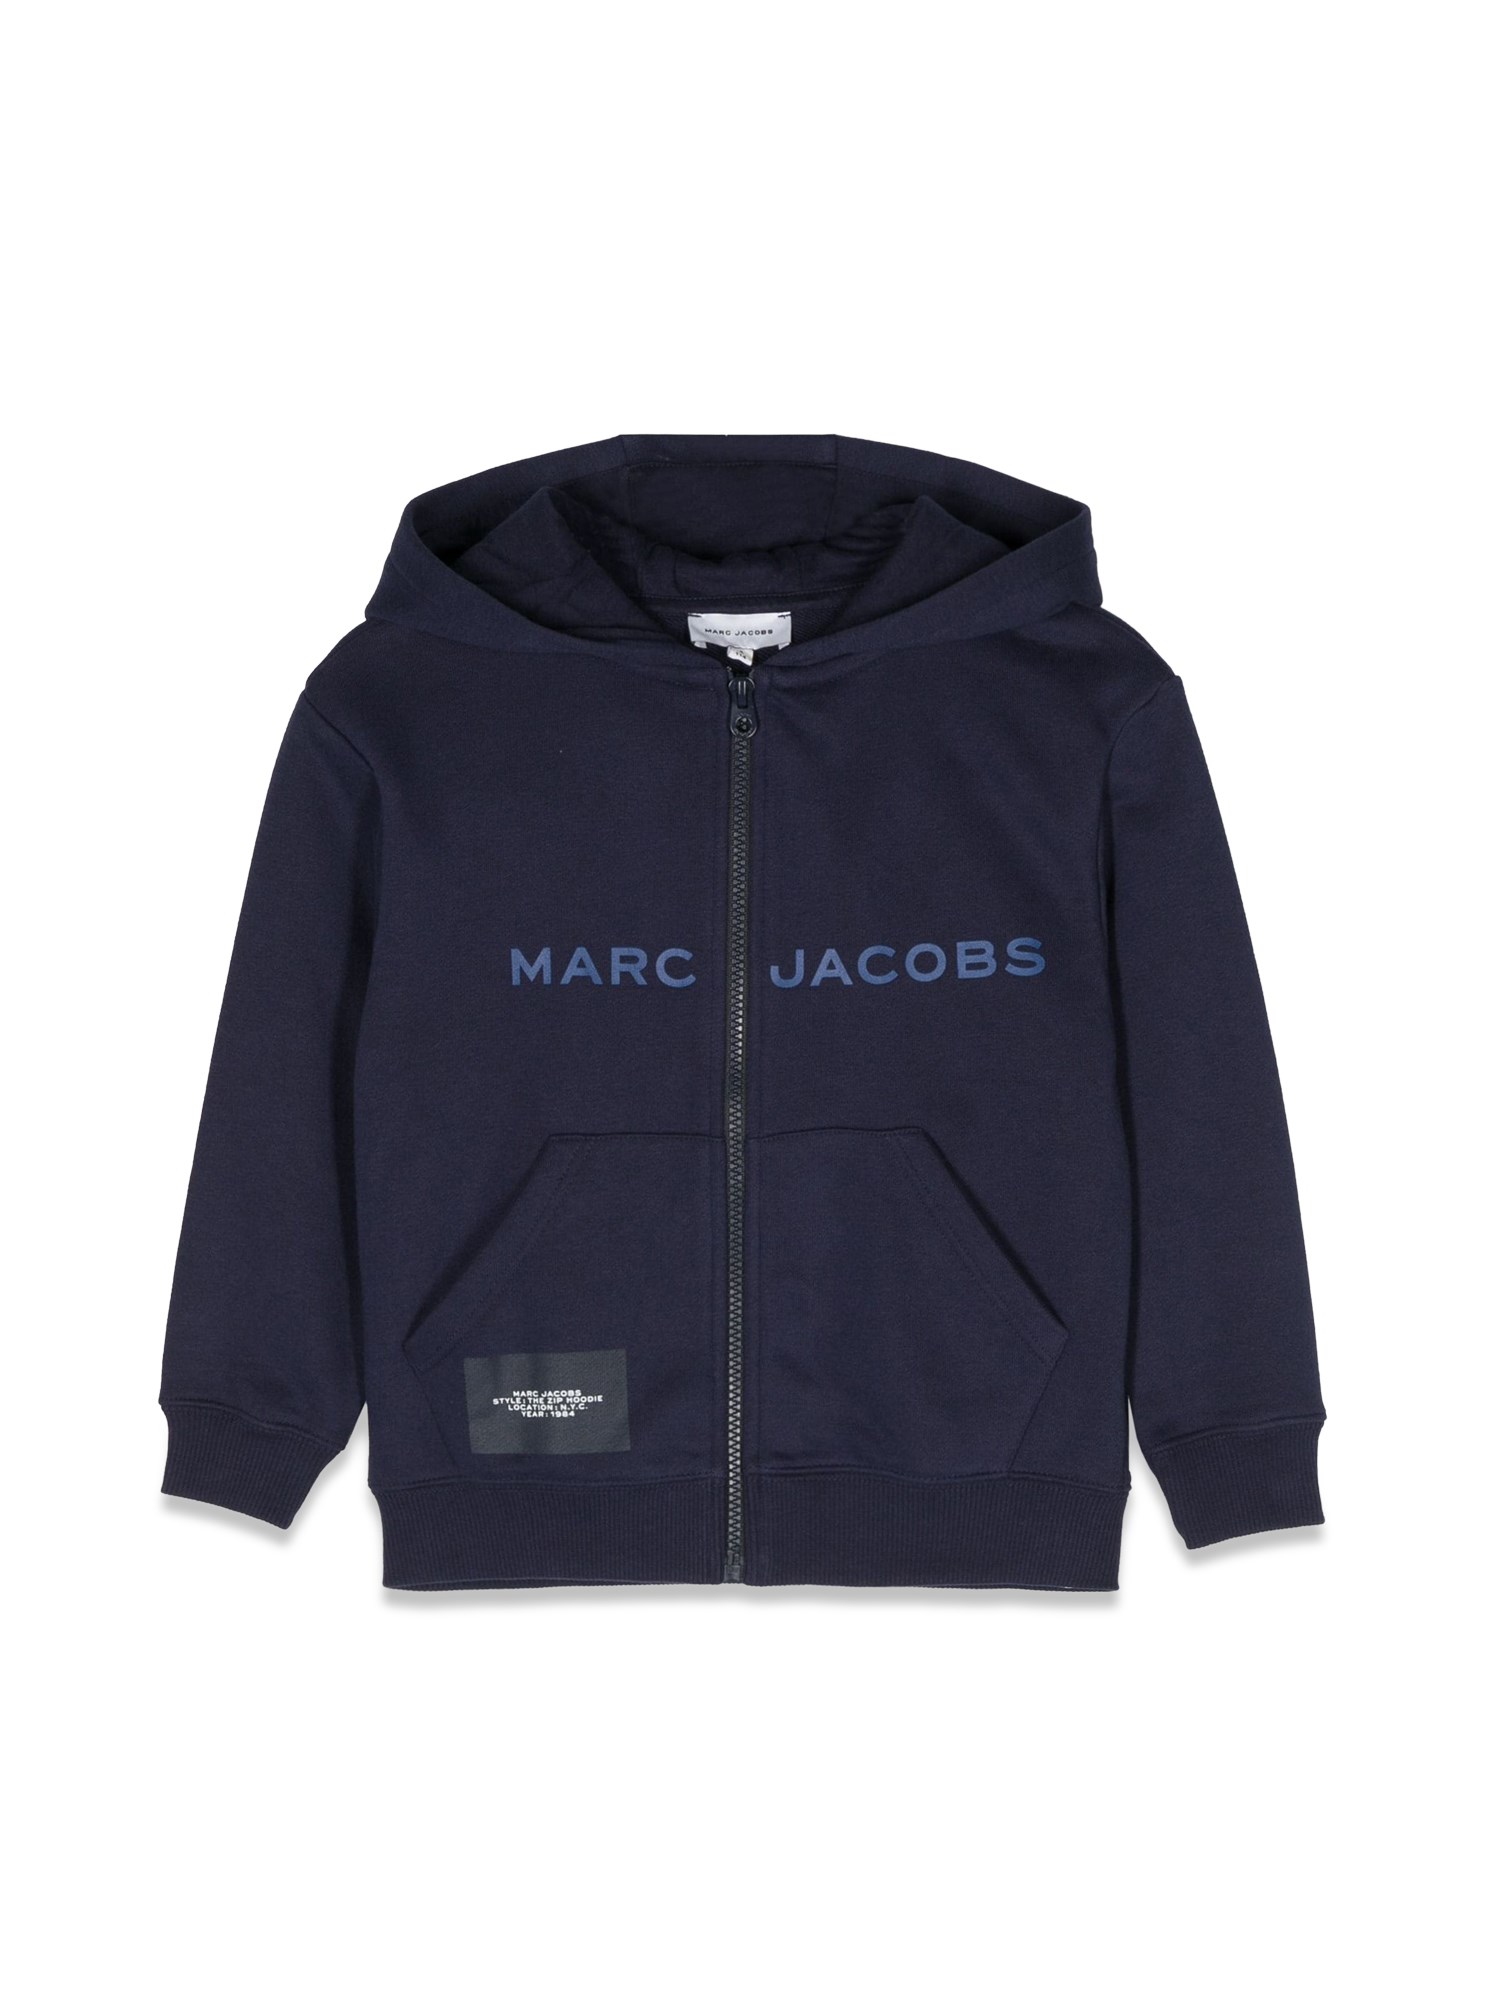 marc jacobs zipper hoodie